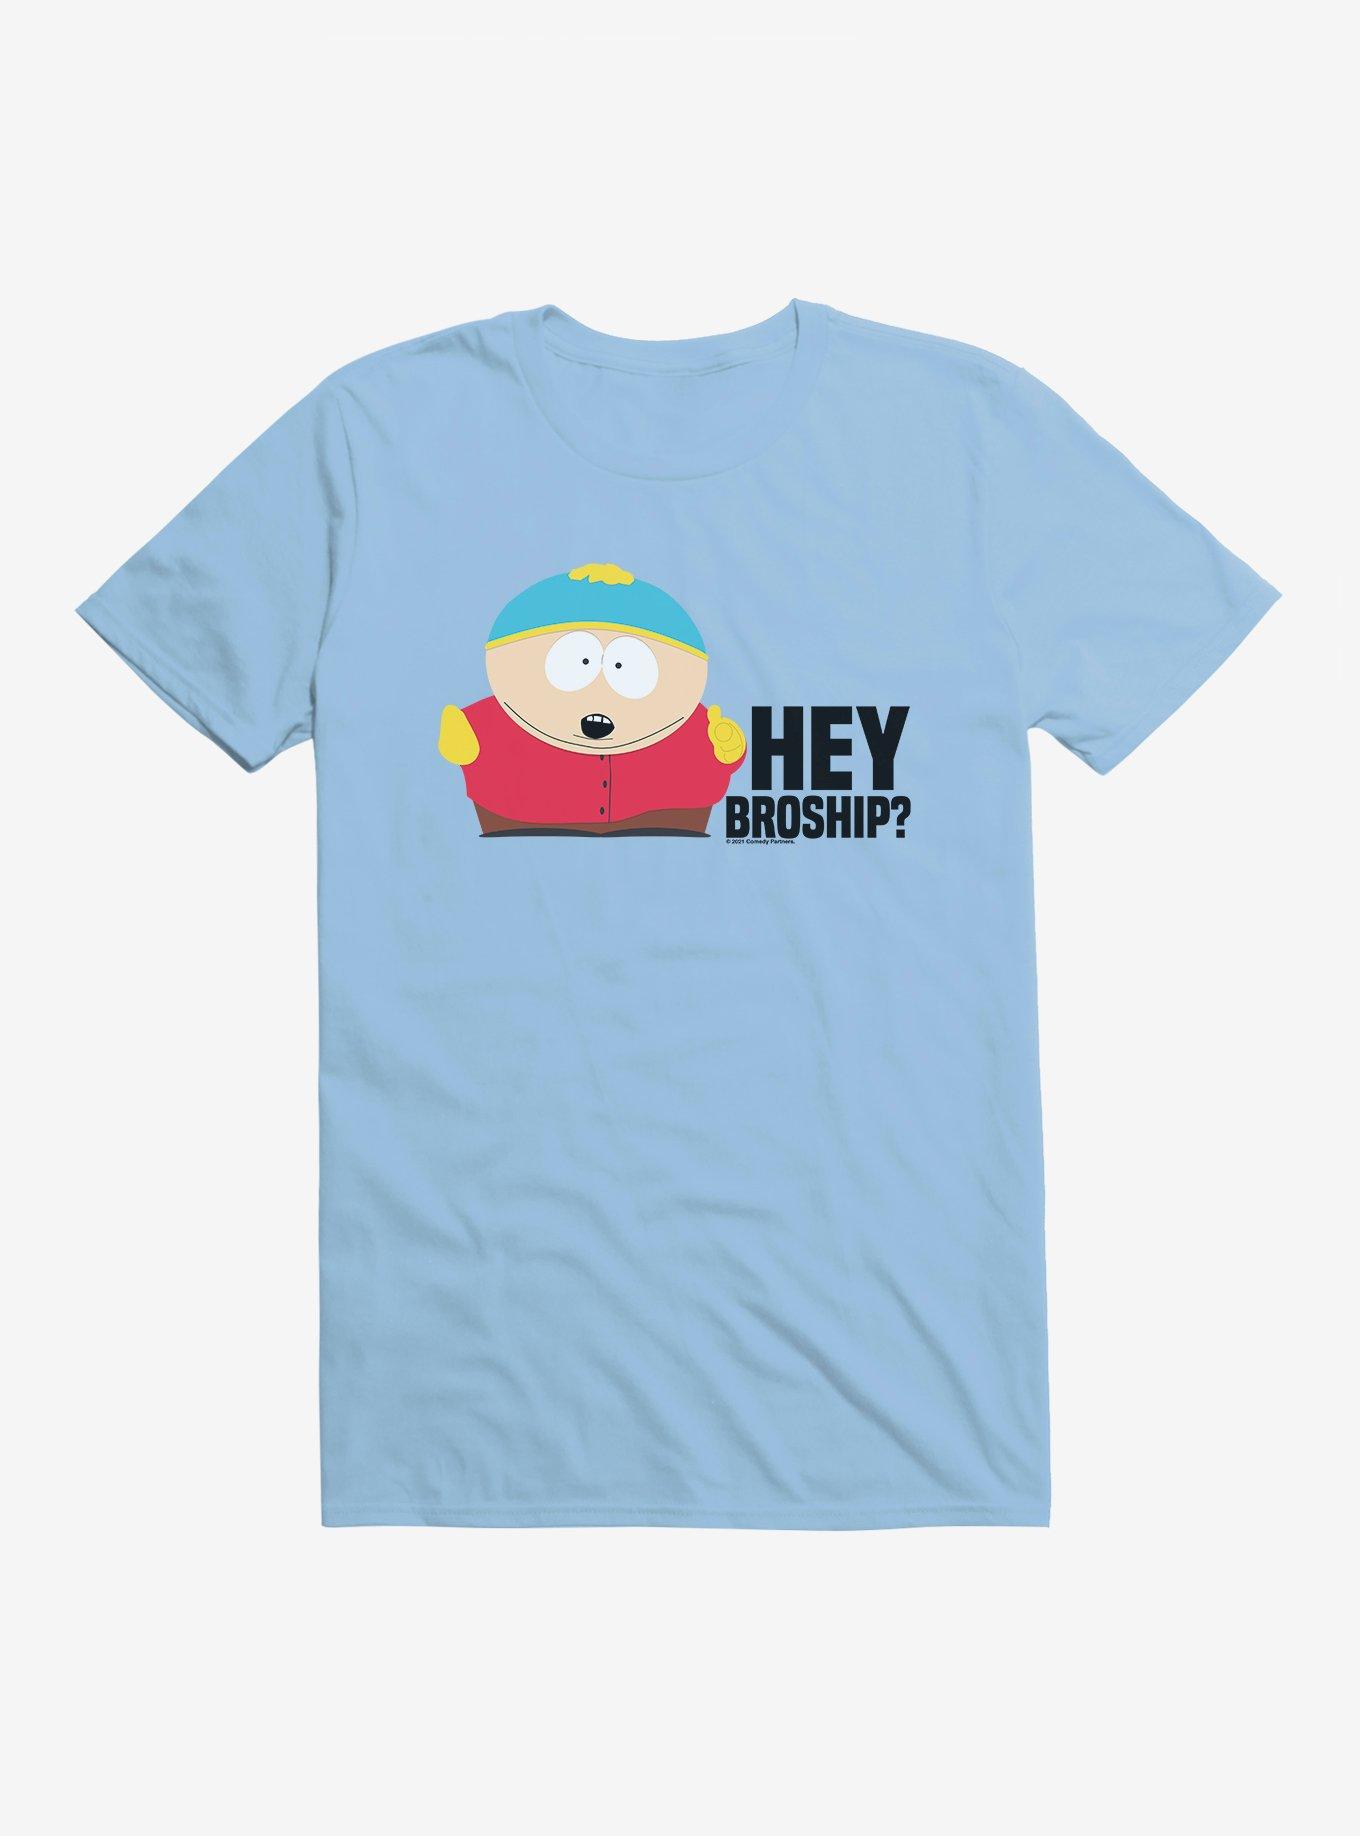 South Park Season Reference Broship T-Shirt, LIGHT BLUE, hi-res